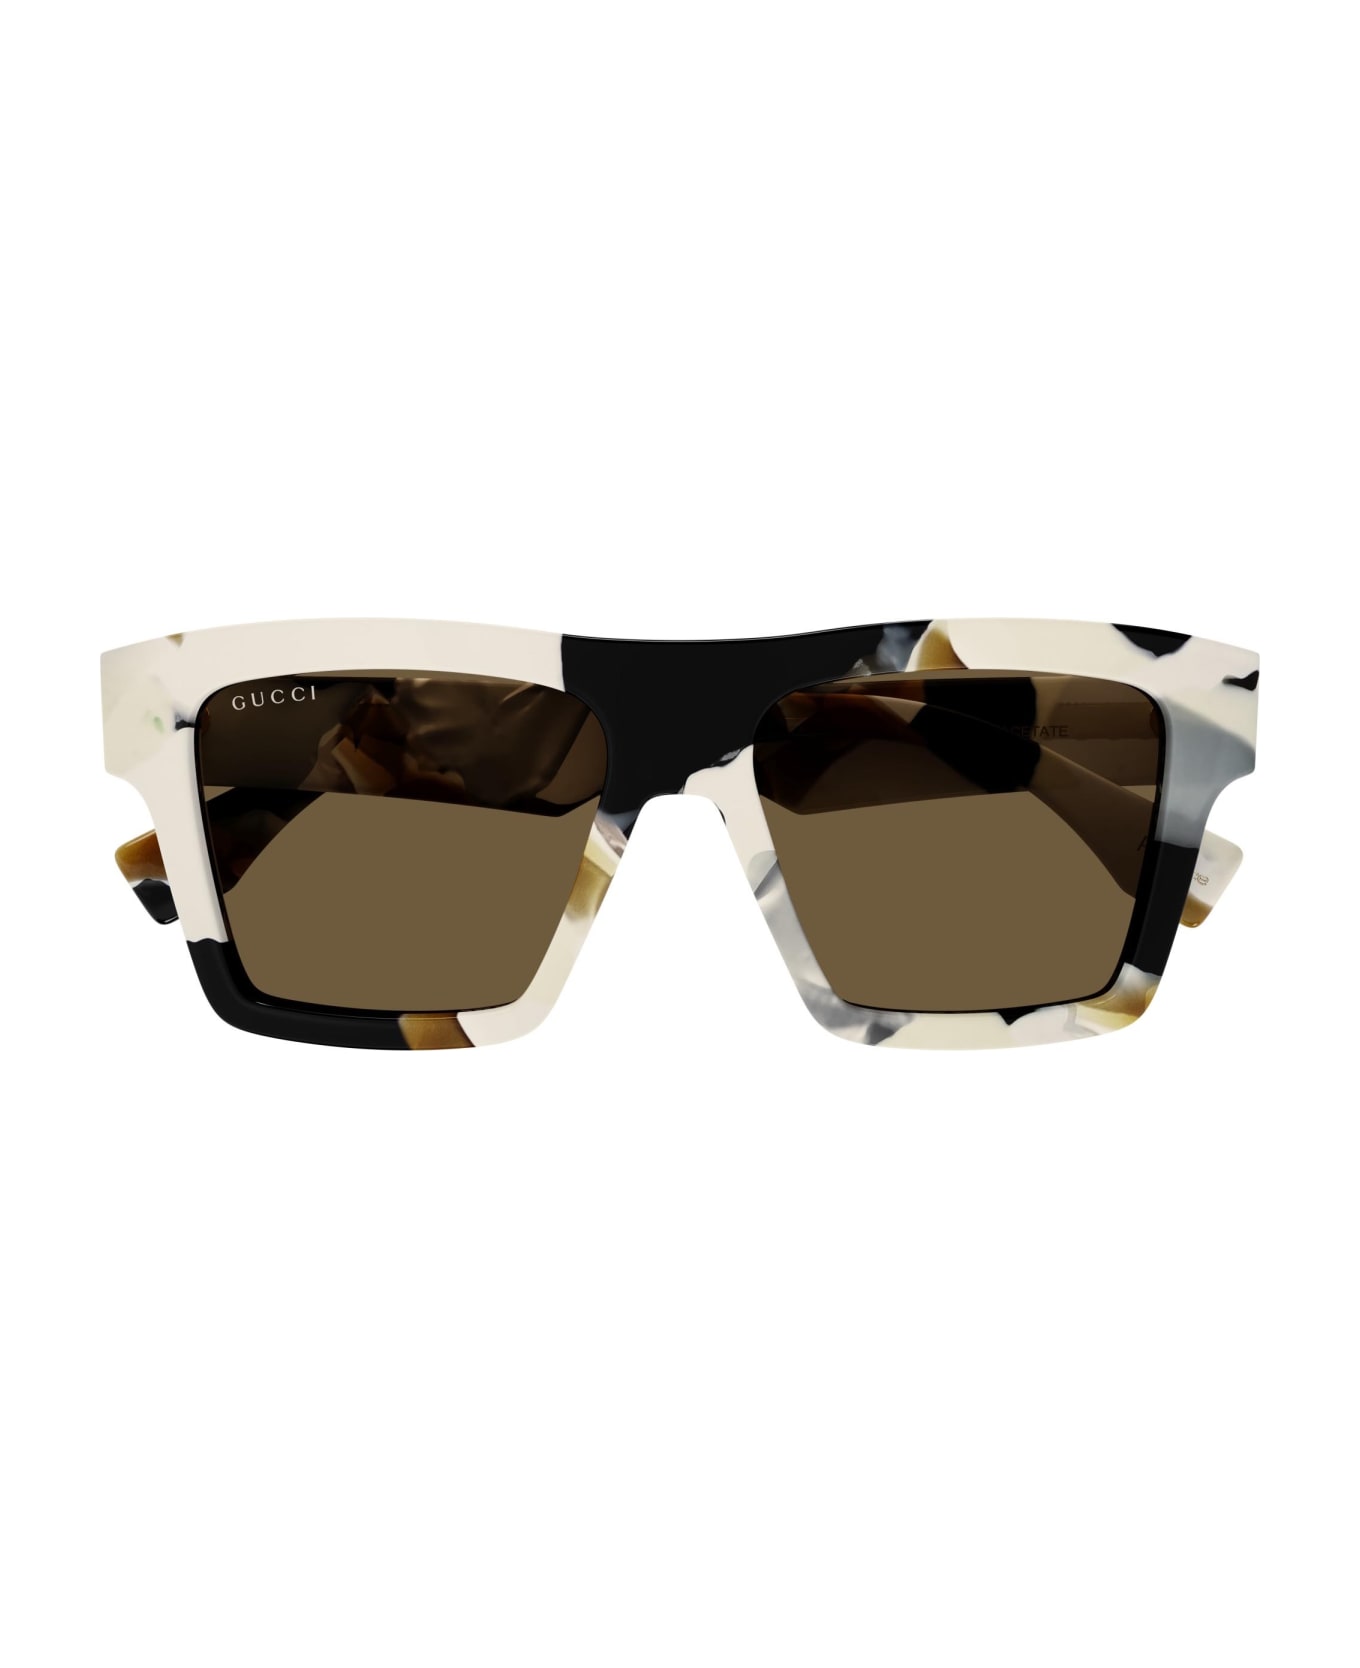 Gucci Eyewear Sunglasses - Bianco e marrone tartarugato/Marrone サングラス